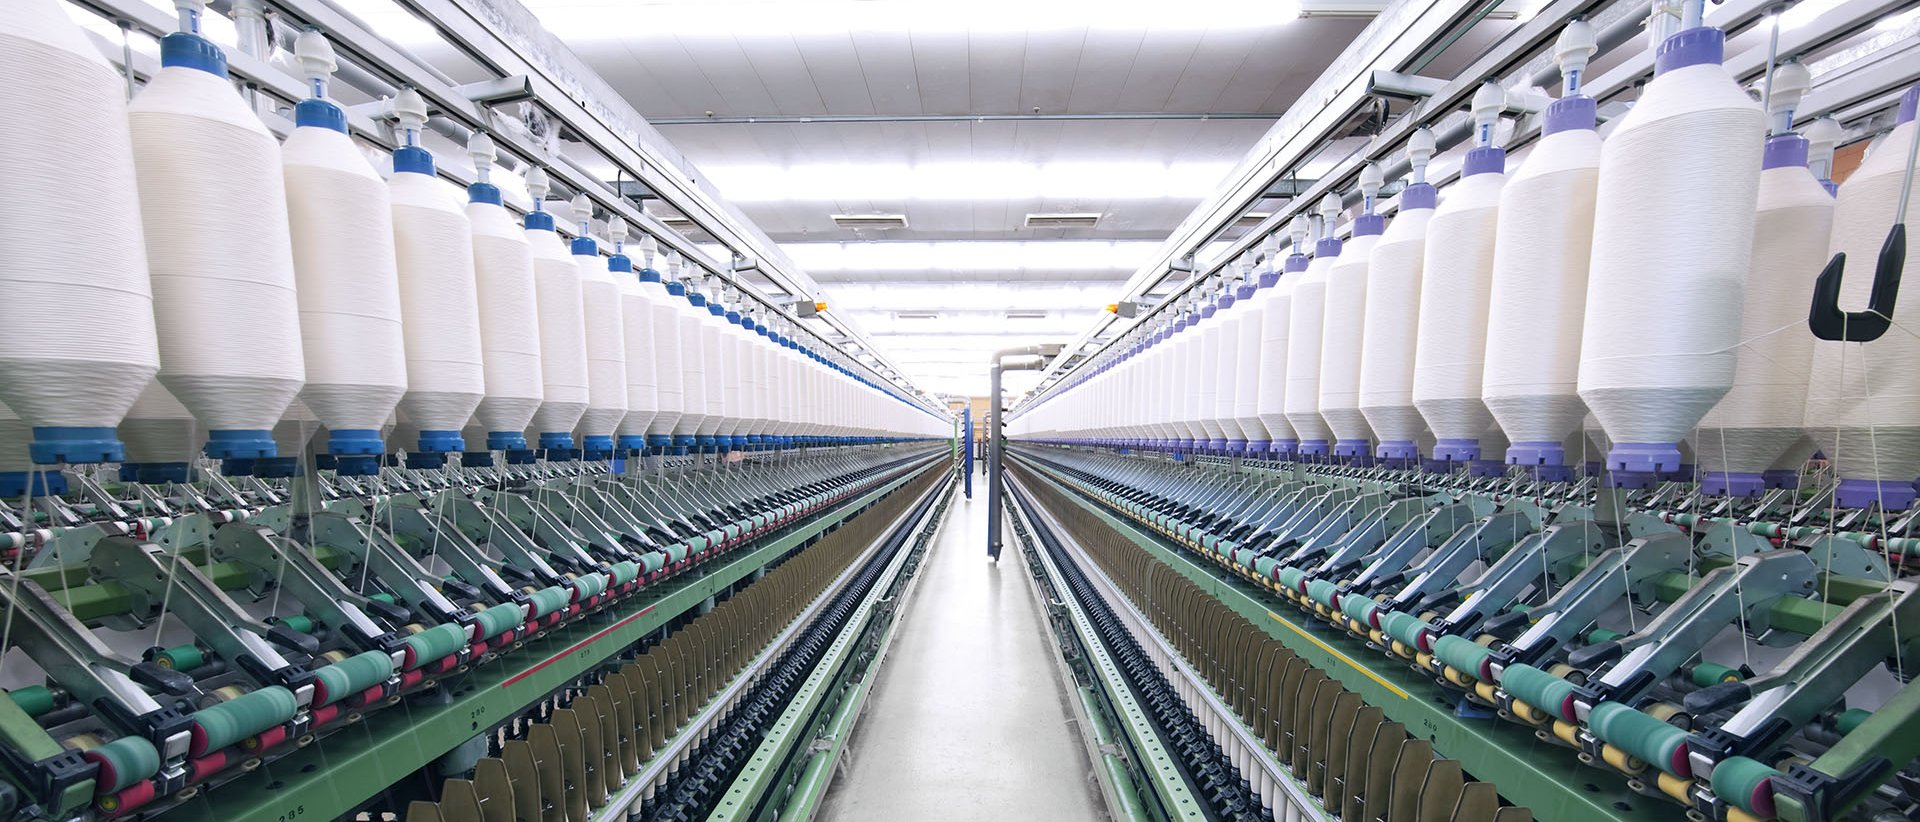 Machine textile